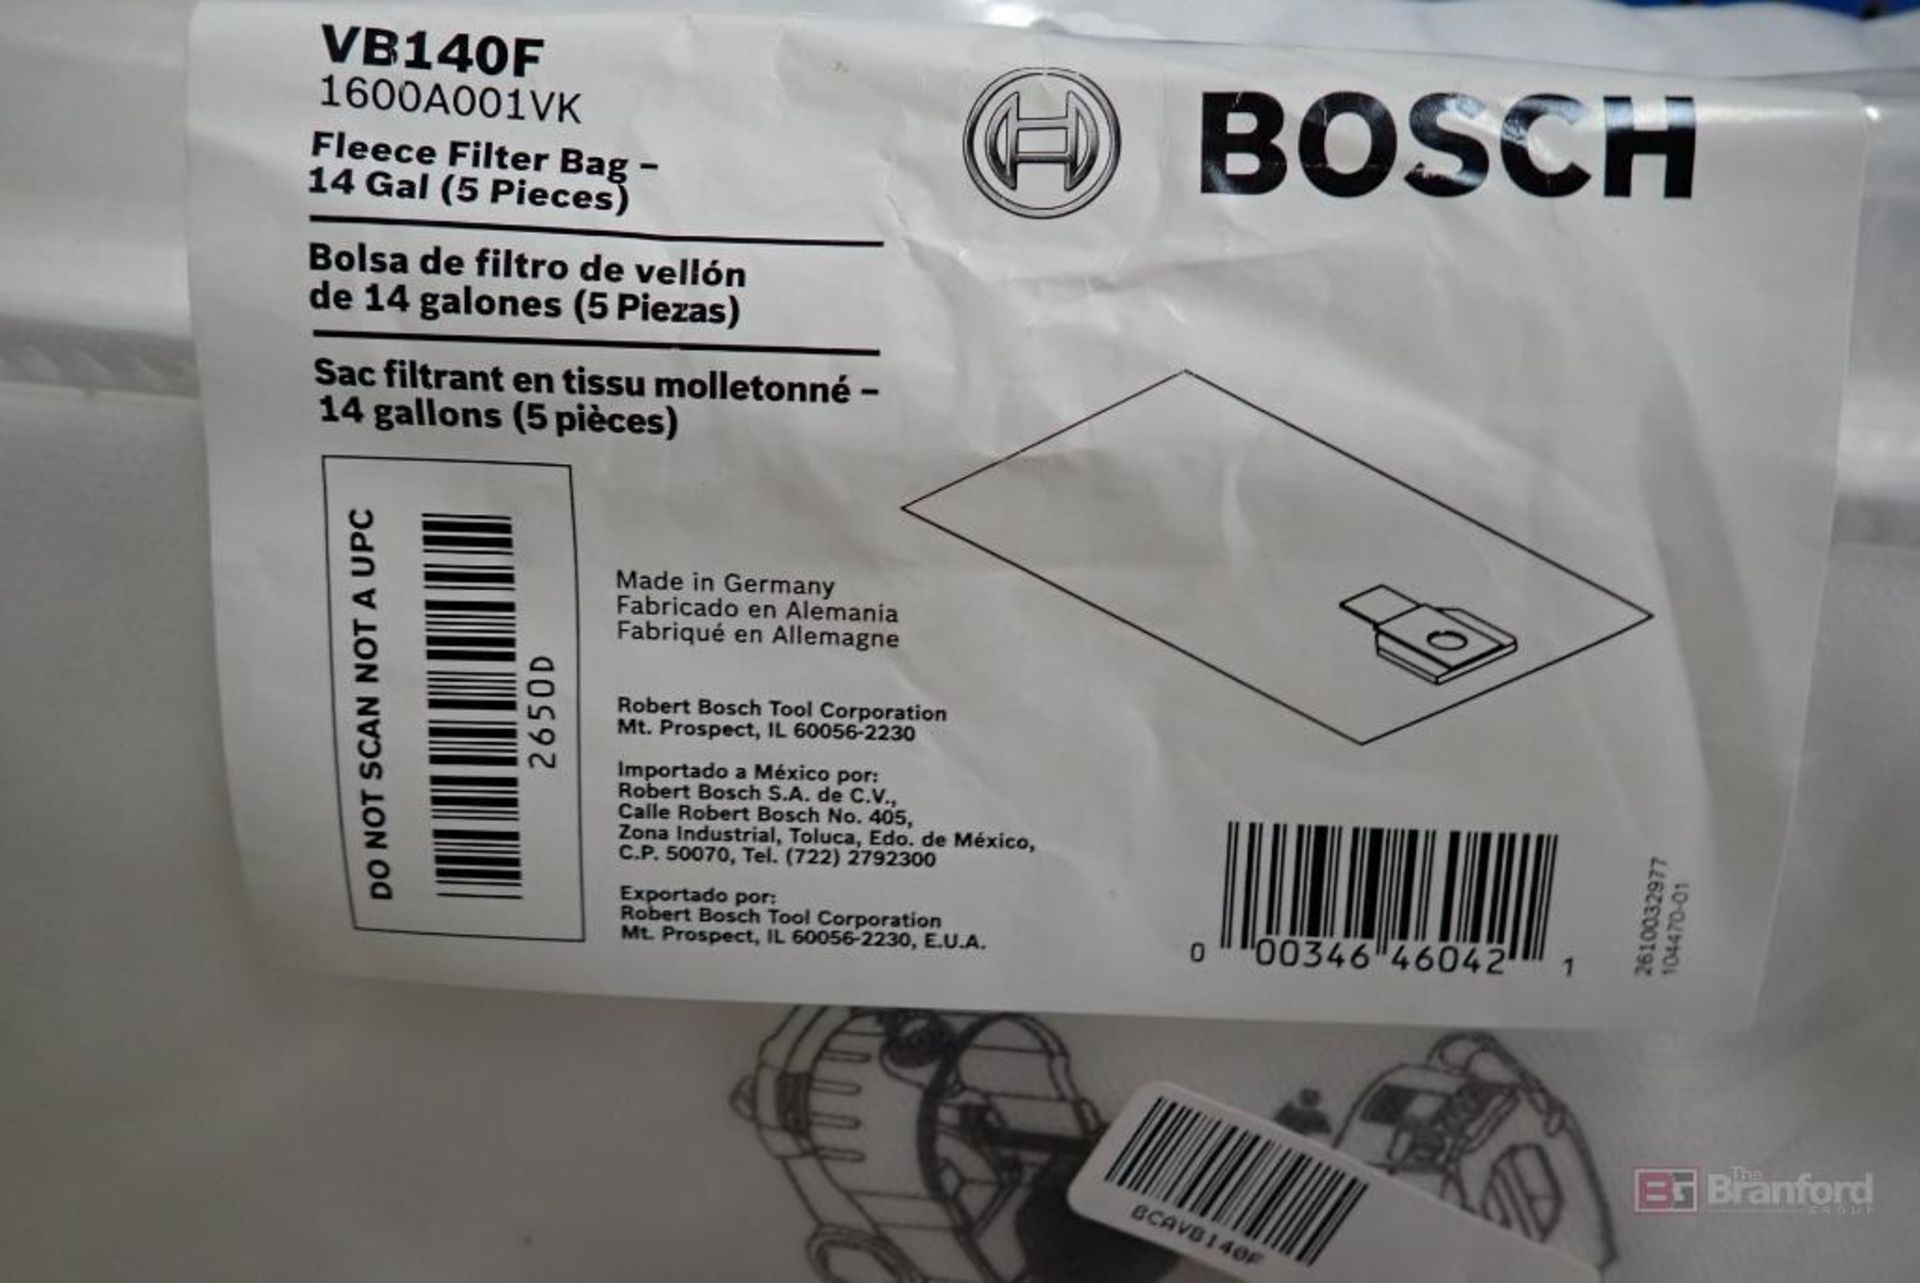 Box Lot of Bosch VB140F-30 Fleece Filter Bags - Image 3 of 3